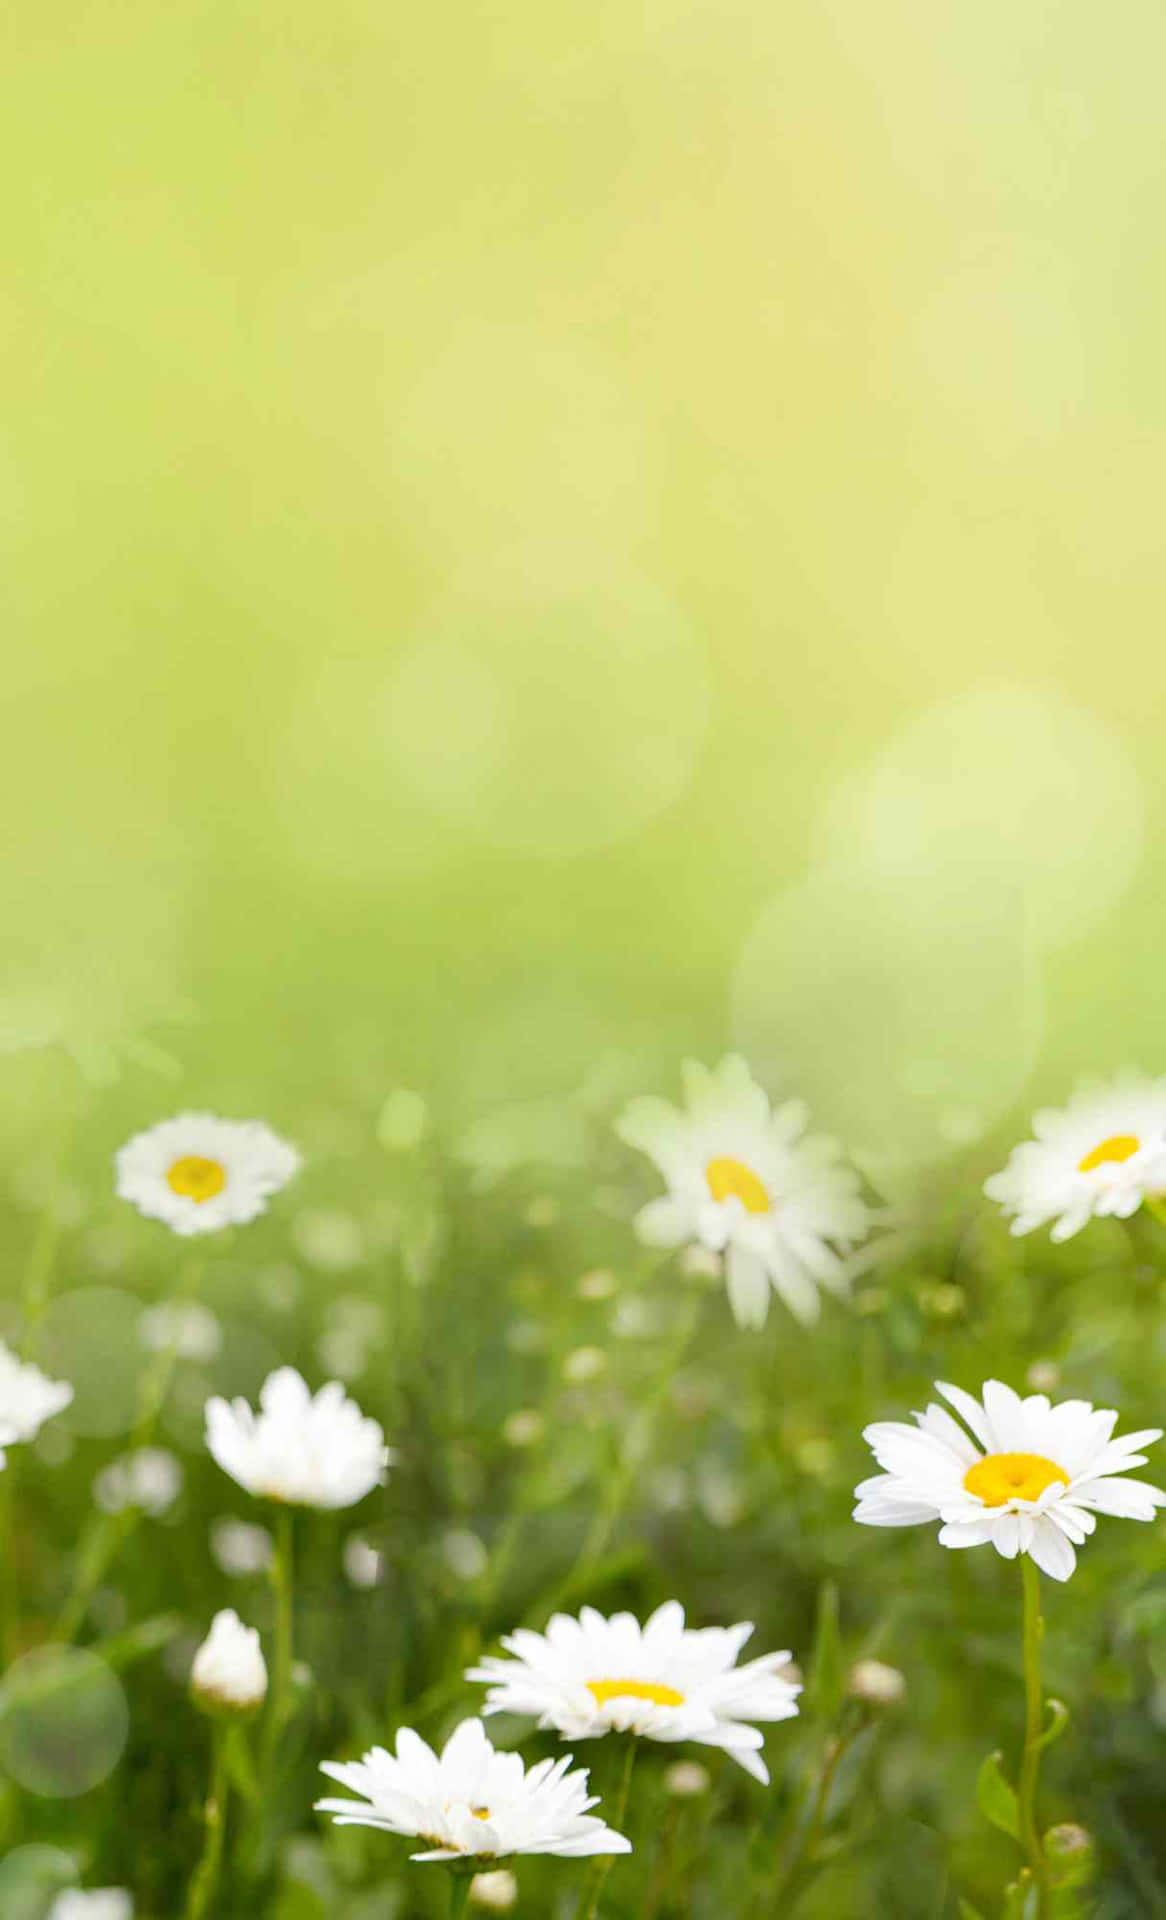 Springtime Daisy Field Background Wallpaper